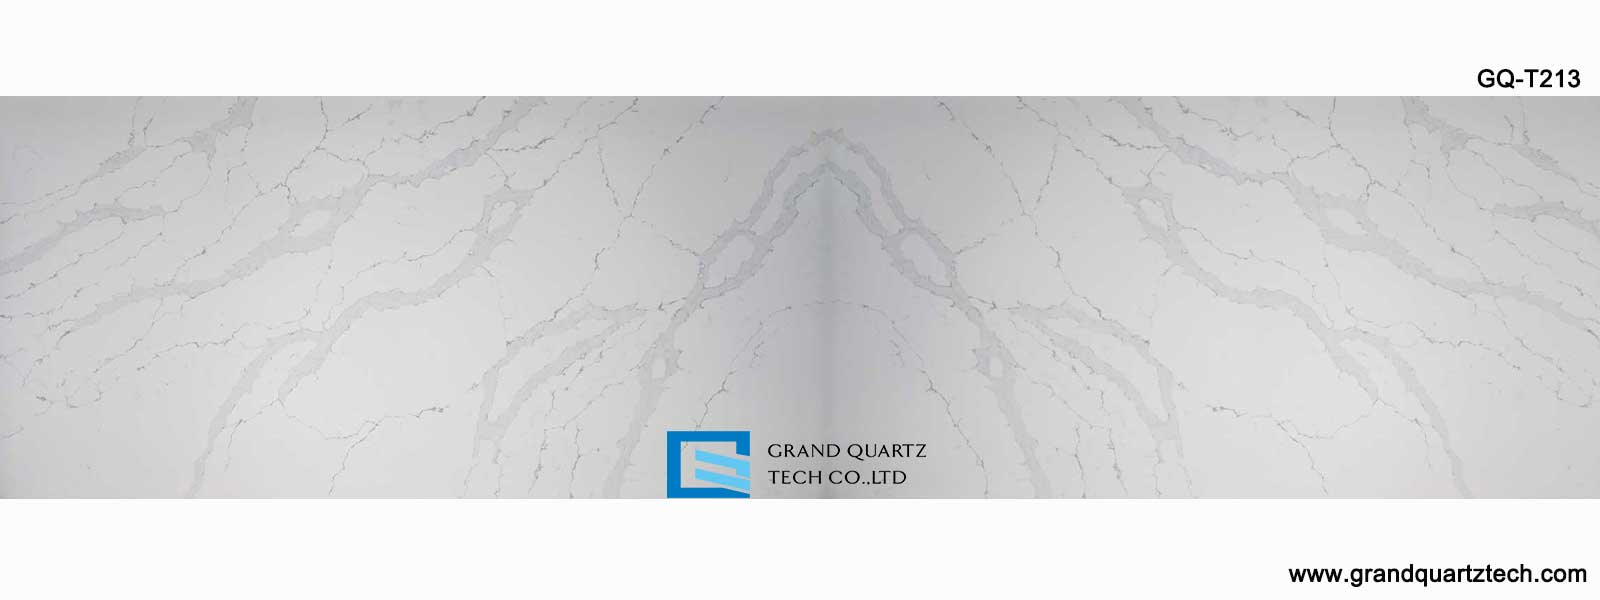 GQ-T213-symmetrical-quartz.jpg 